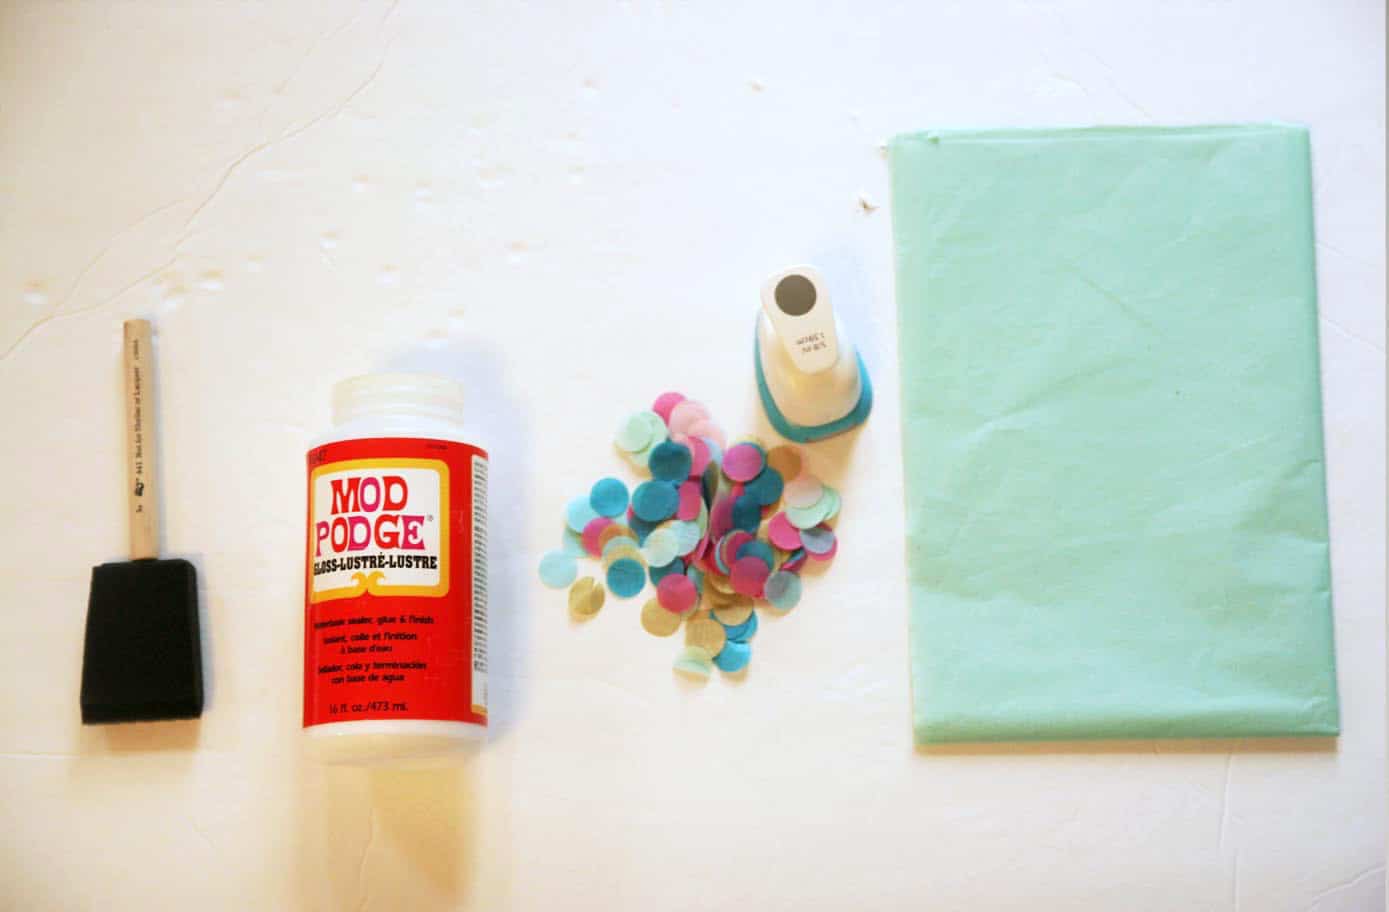 Foam brush, Mod Podge Gloss, confetti, circle punch, and tissue paper